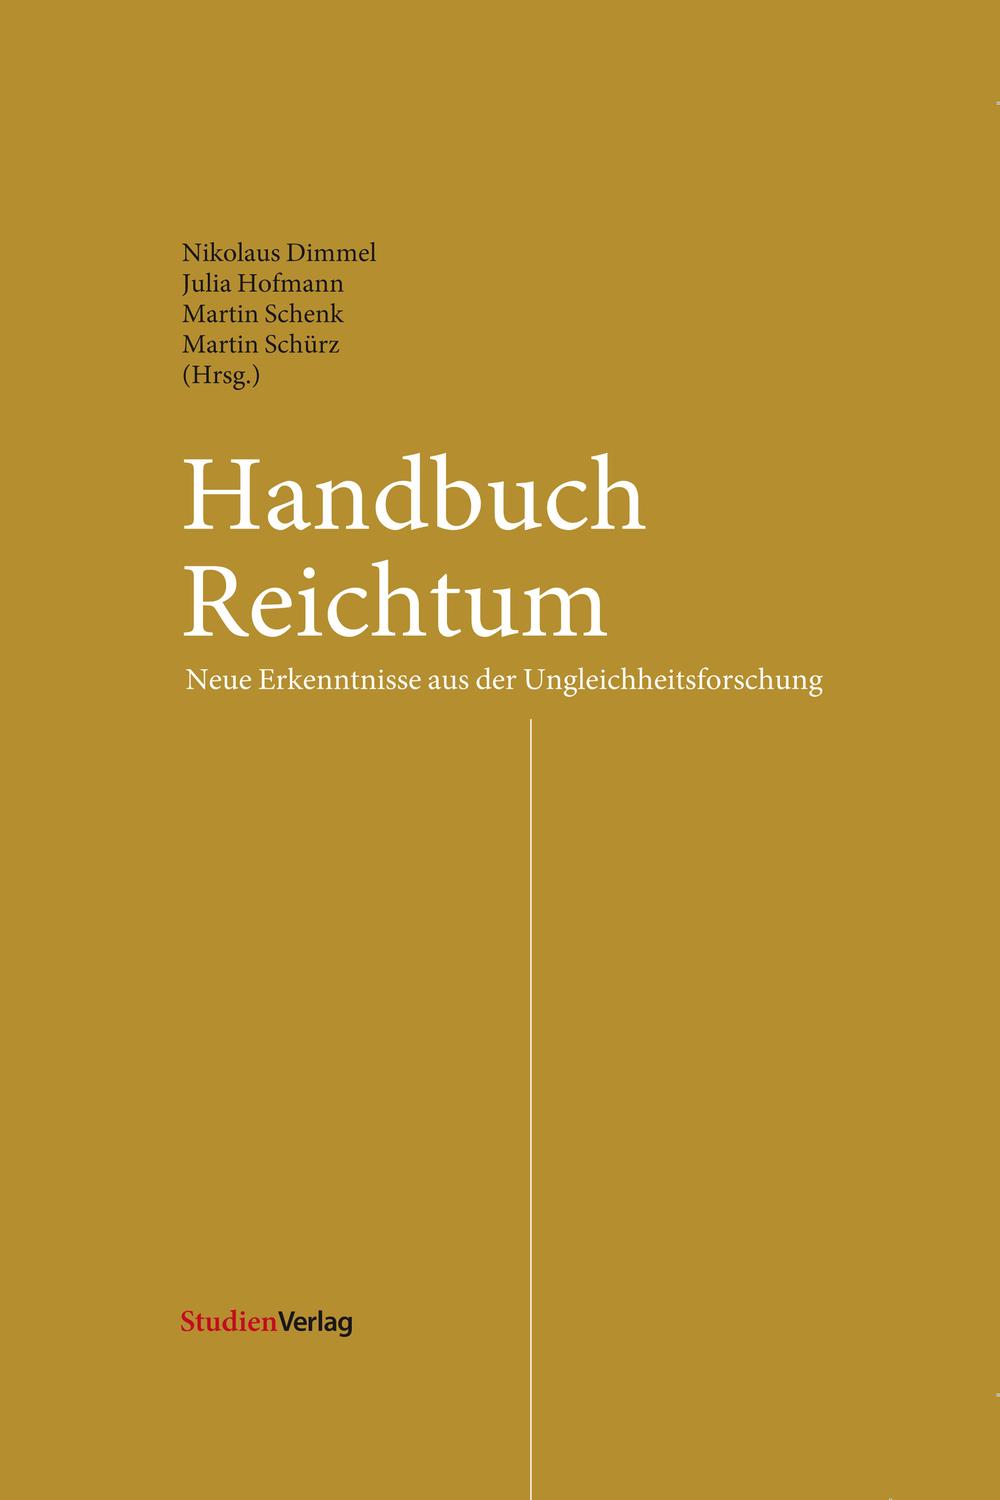 Handbuch Reichtum - Nikolaus Dimmel, Martin Schenk, Julia Hofmann, Martin Schürz